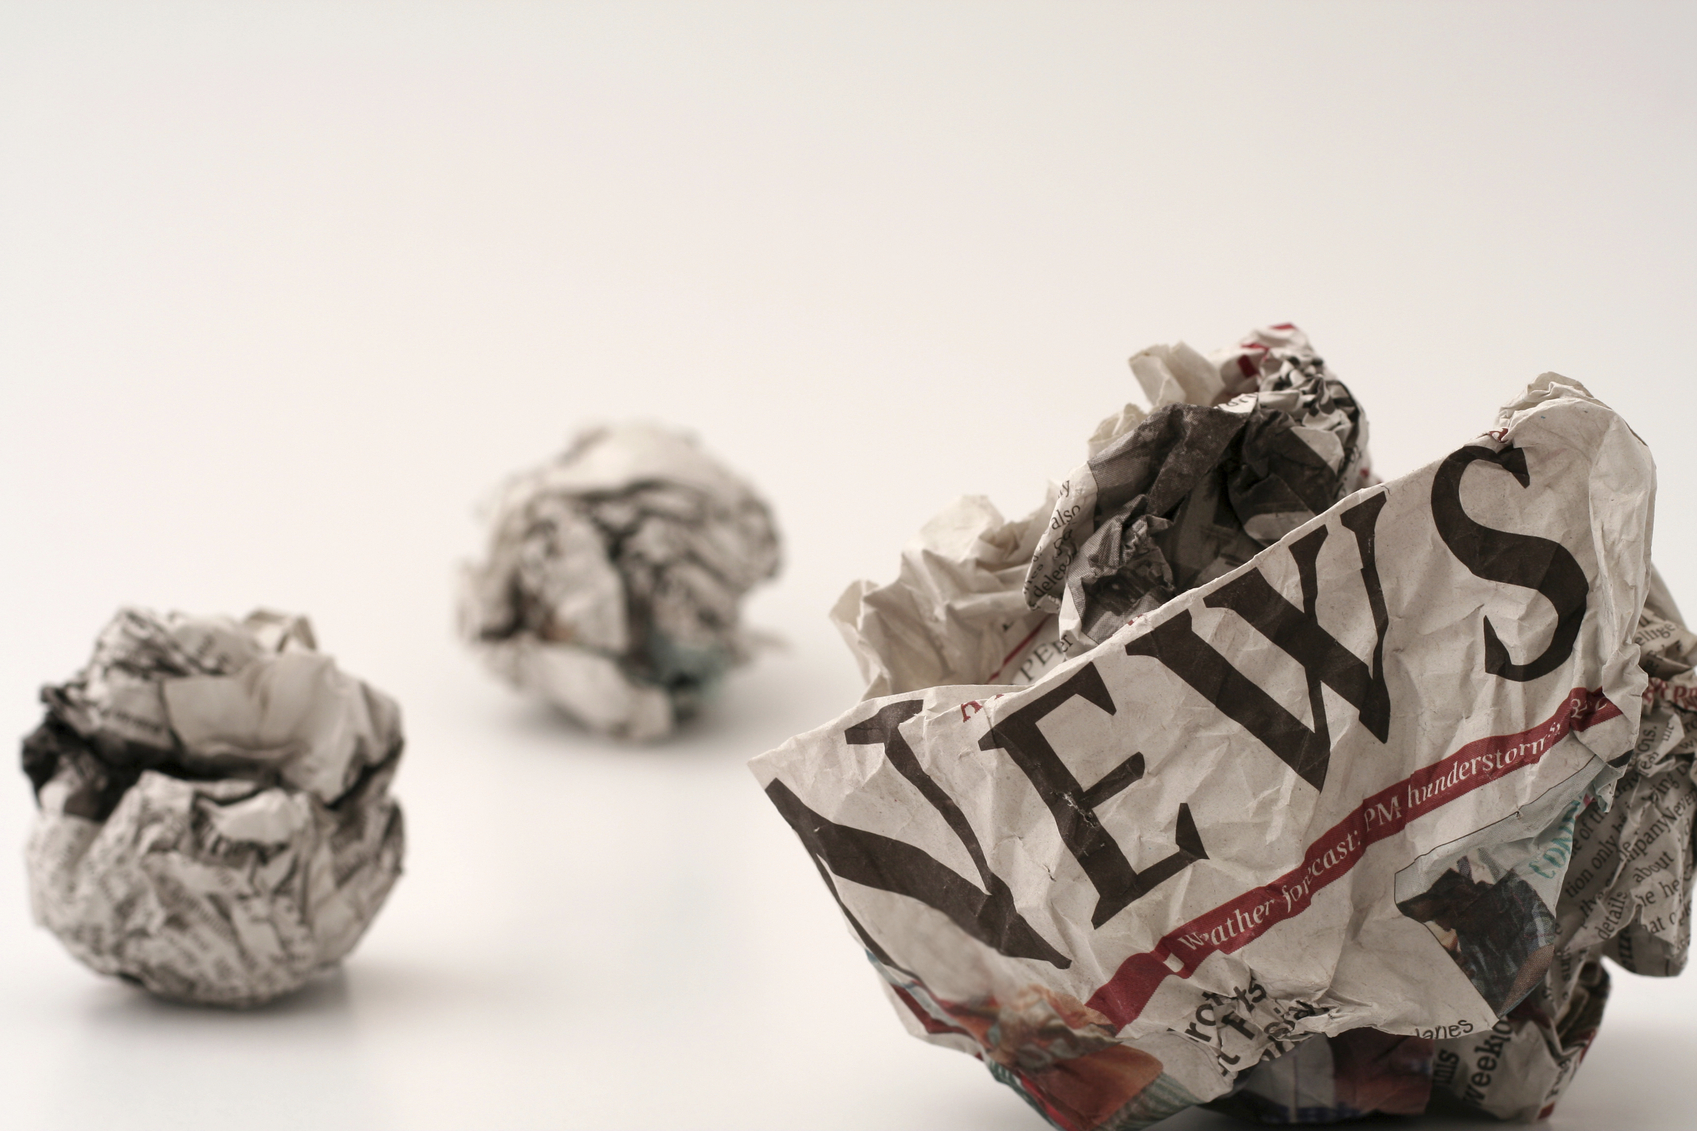 Crumpled newspapers